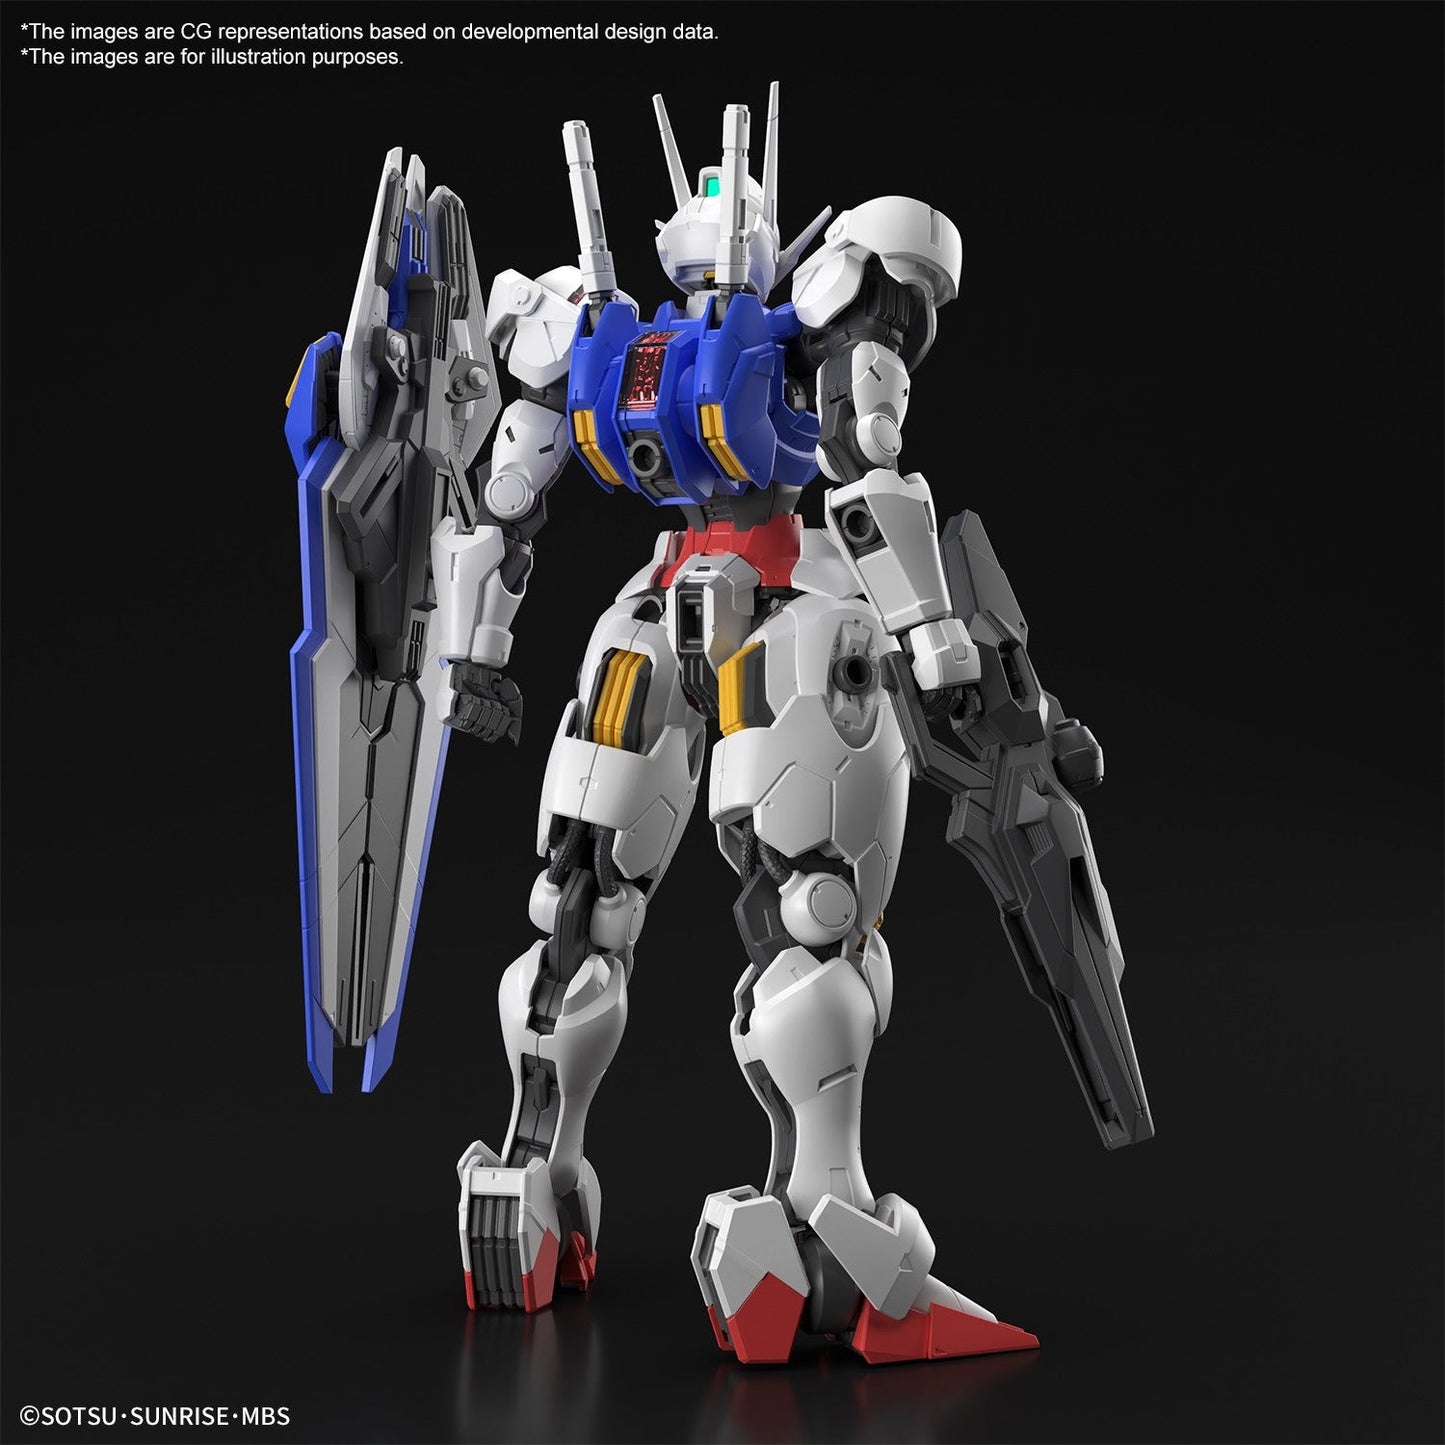 Bandai XVX-016 Gundam Aerial [Mobile Suit Gundam]